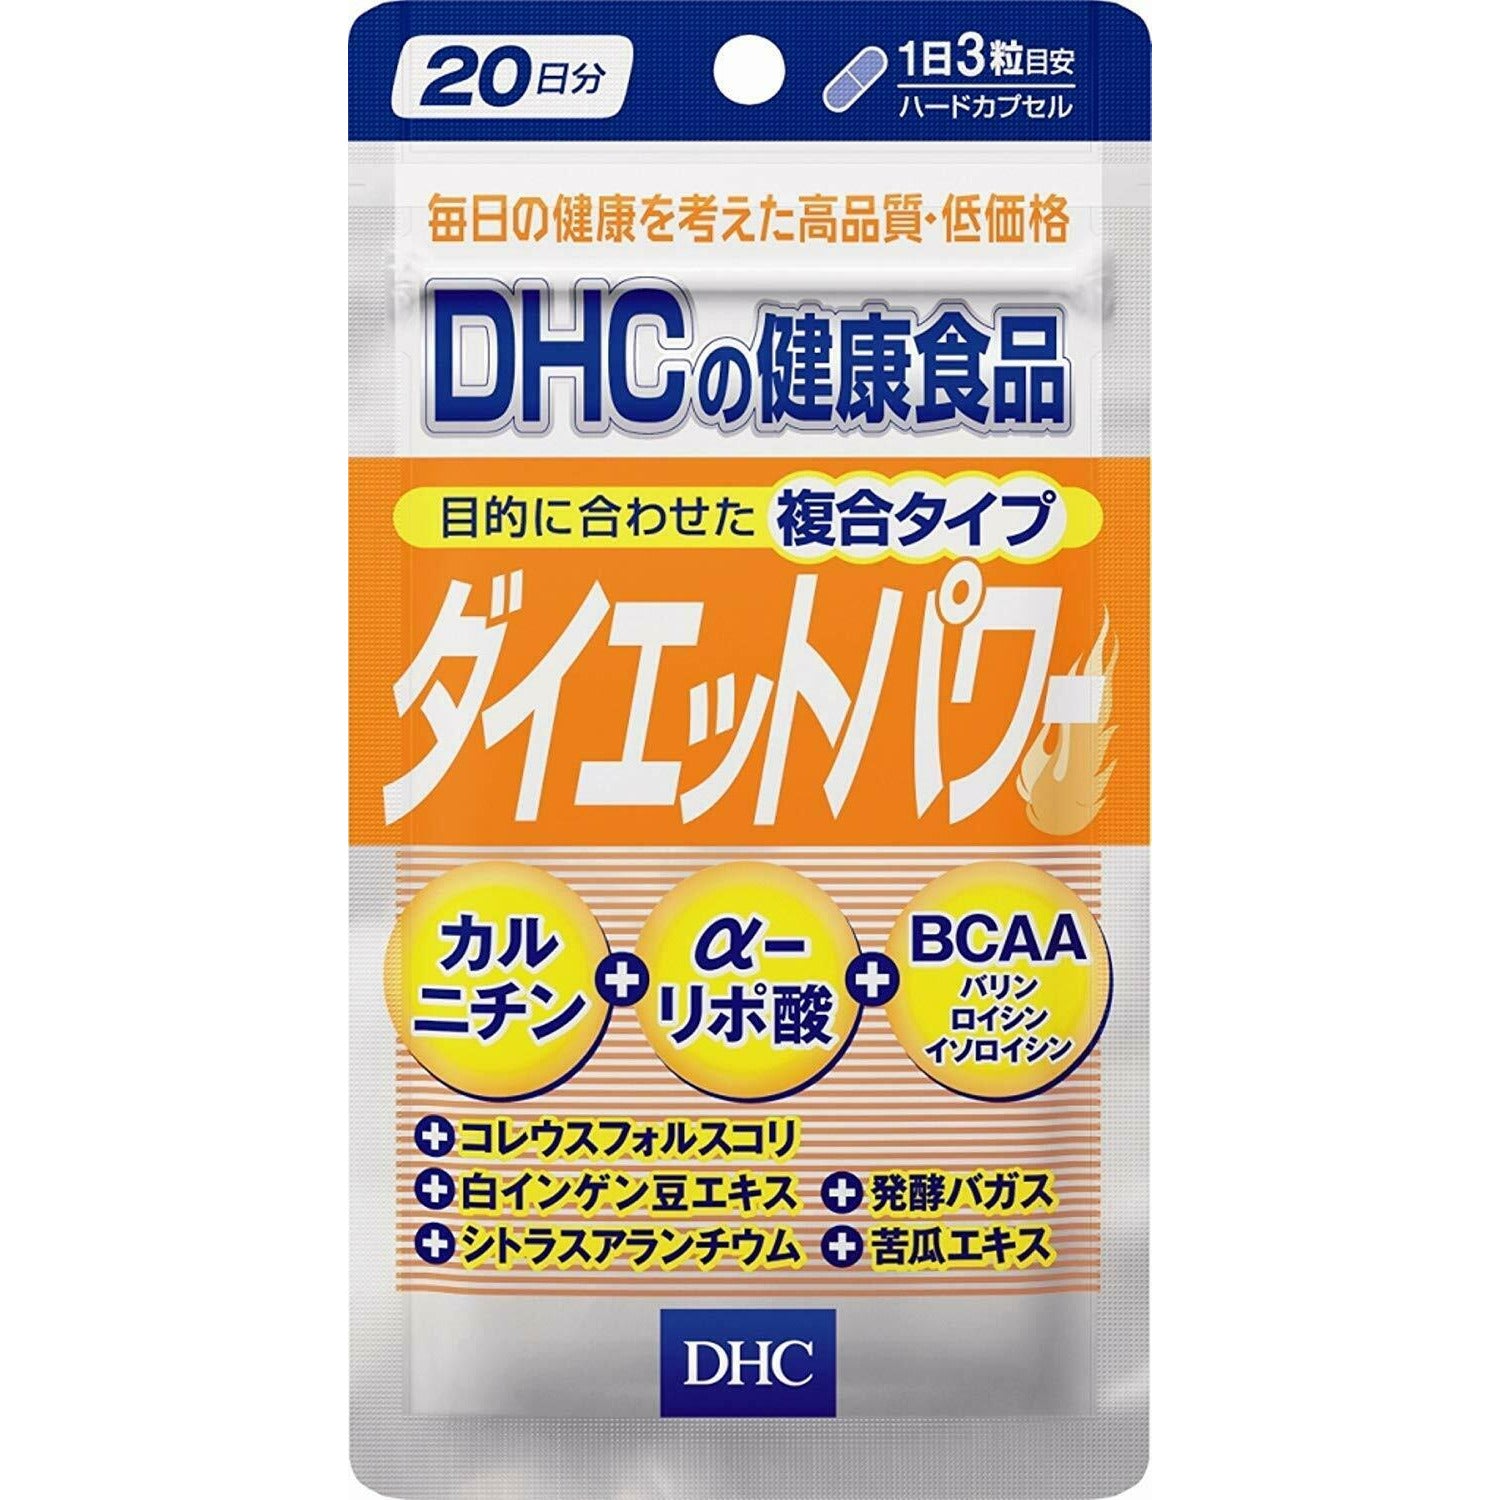 DHC Diet Power Weight Loss Supplement 20 days 